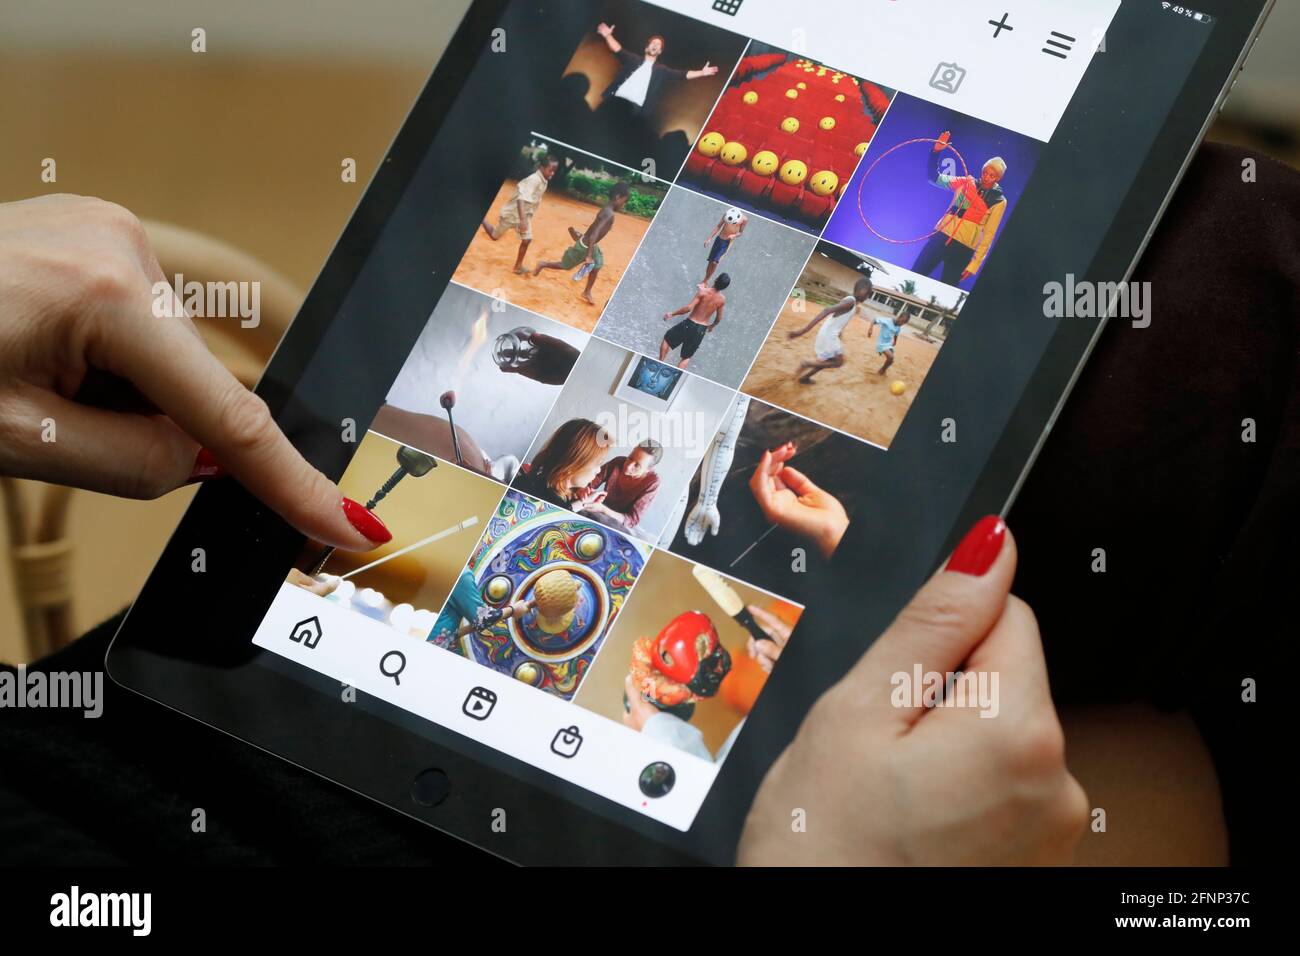 Woman reading  Instagram on an Apple iPad digital tablet.  Instagram social media app.  France. Stock Photo